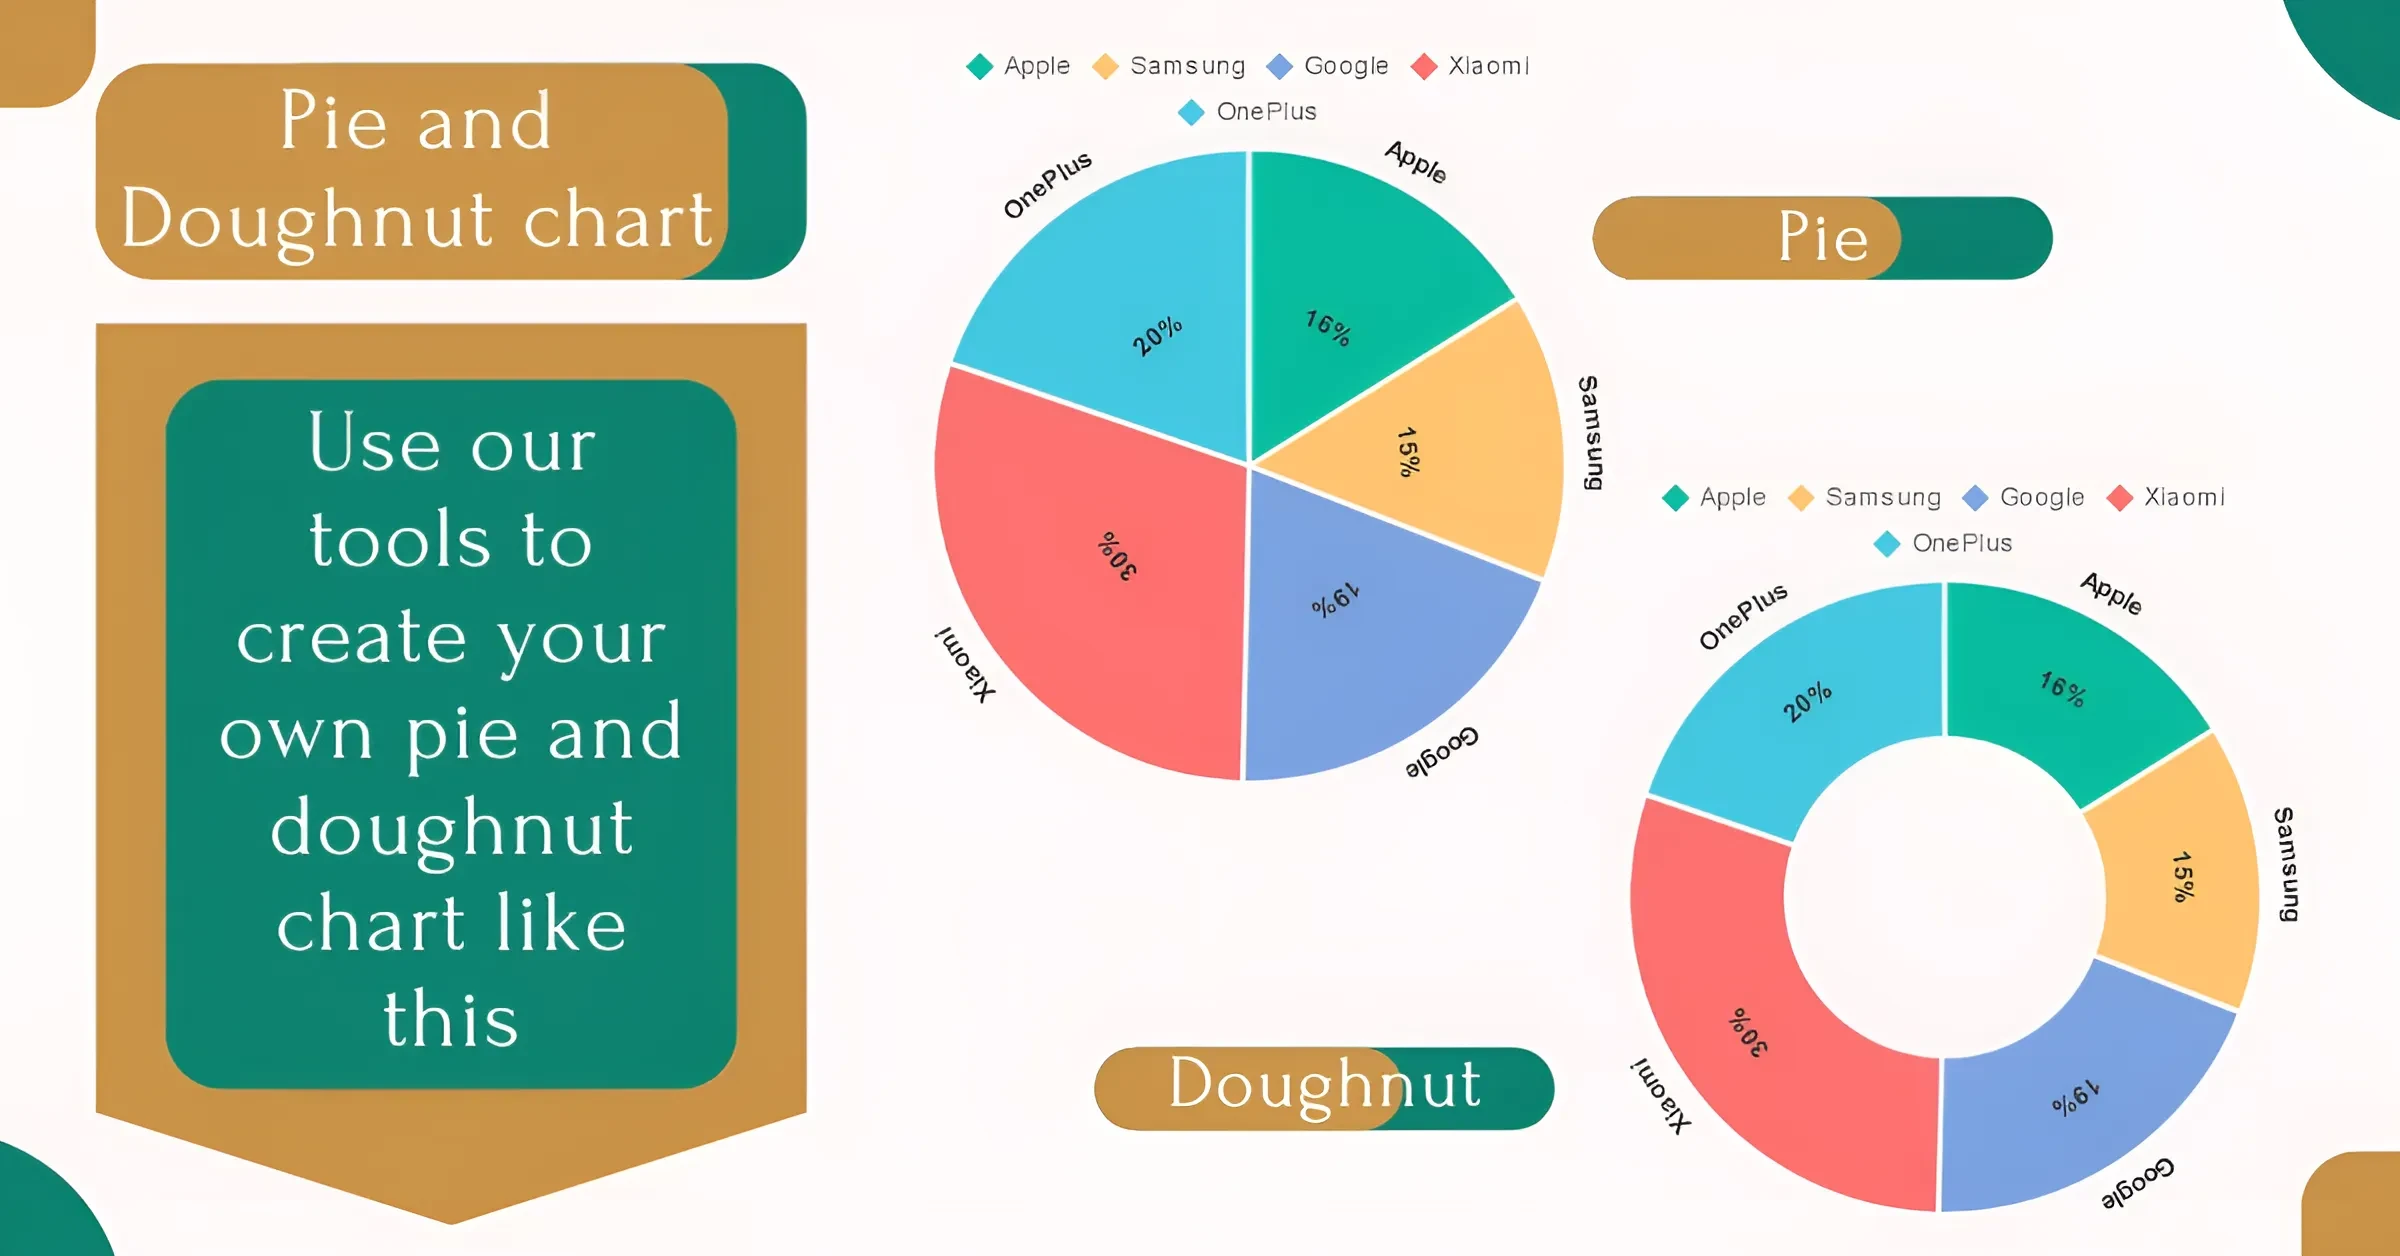 Pie and Doughnut chart image